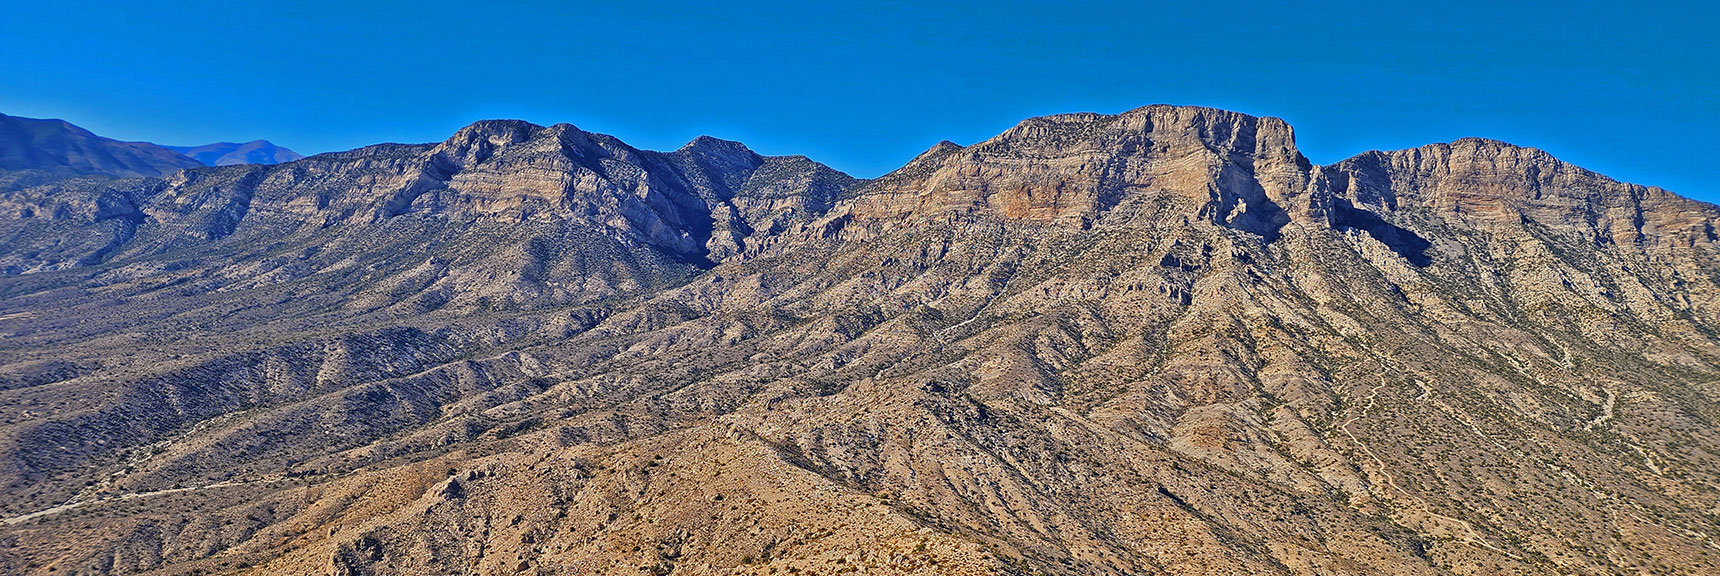 Keystone Thrust Cliffs. Left to Right: El Bastardo, El Padre, La Madre | Turtlehead Peak | Red Rock Canyon National Conservation Area, Nevada